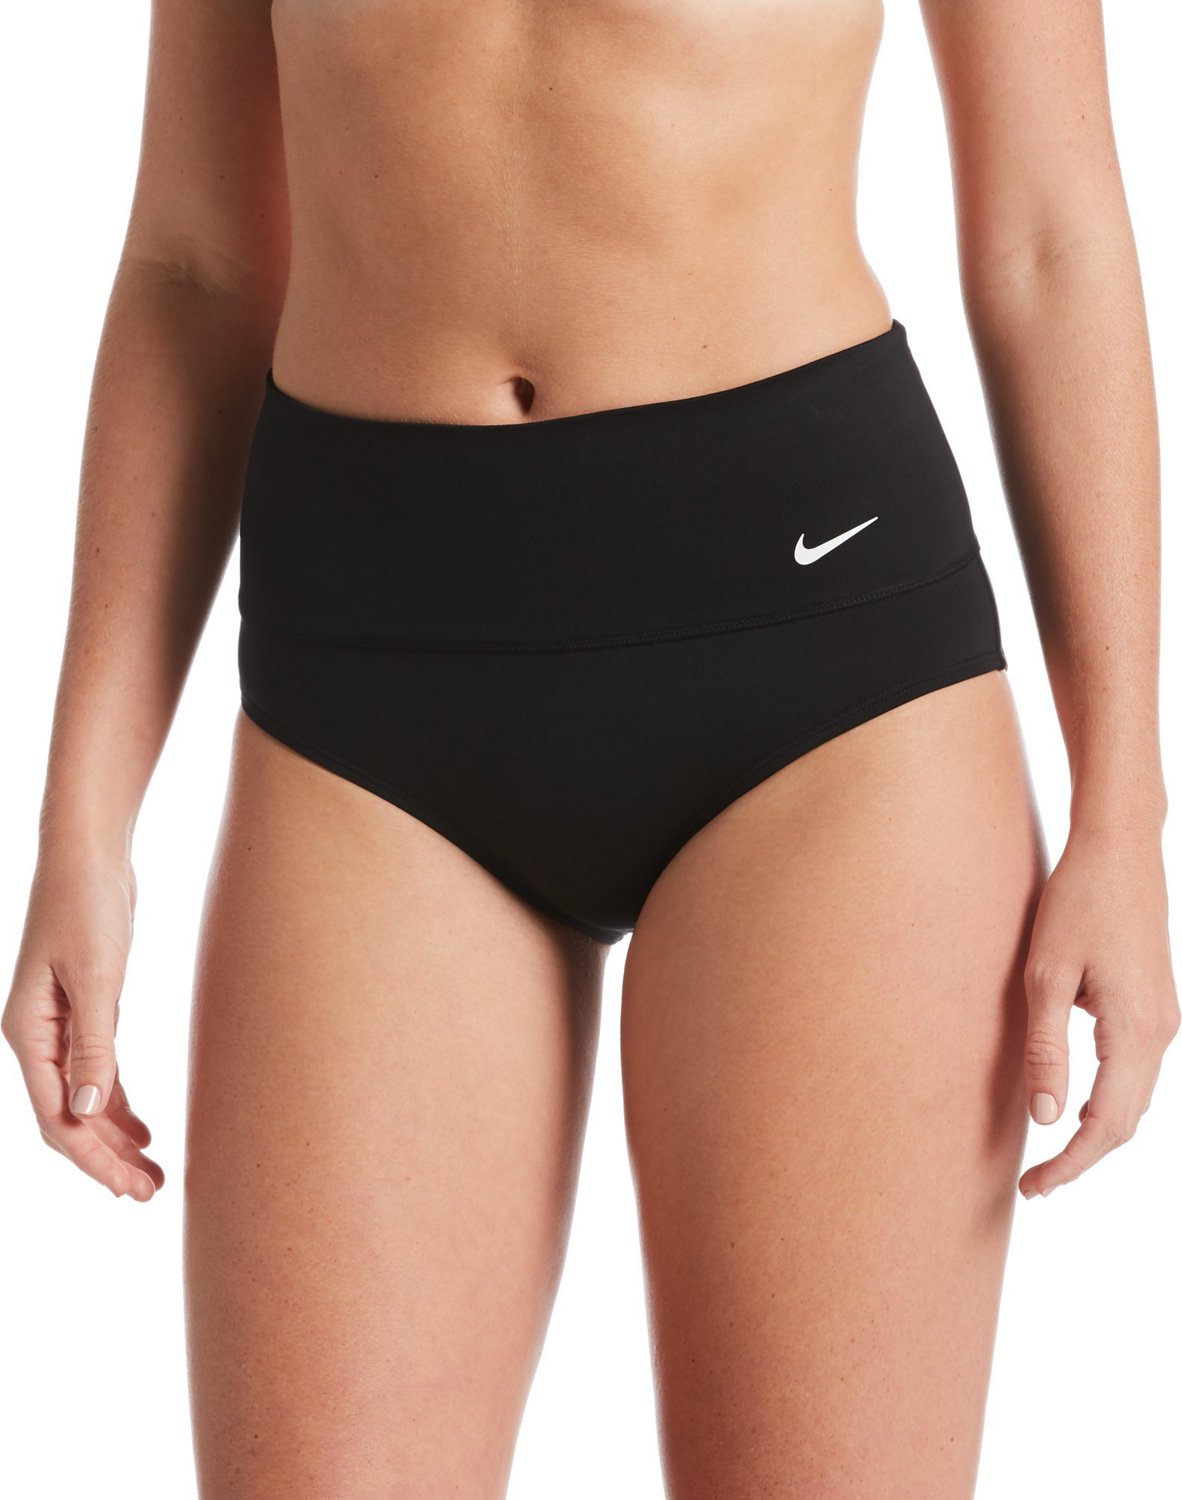 Nike Women's Essential High Waist Swim Bottom